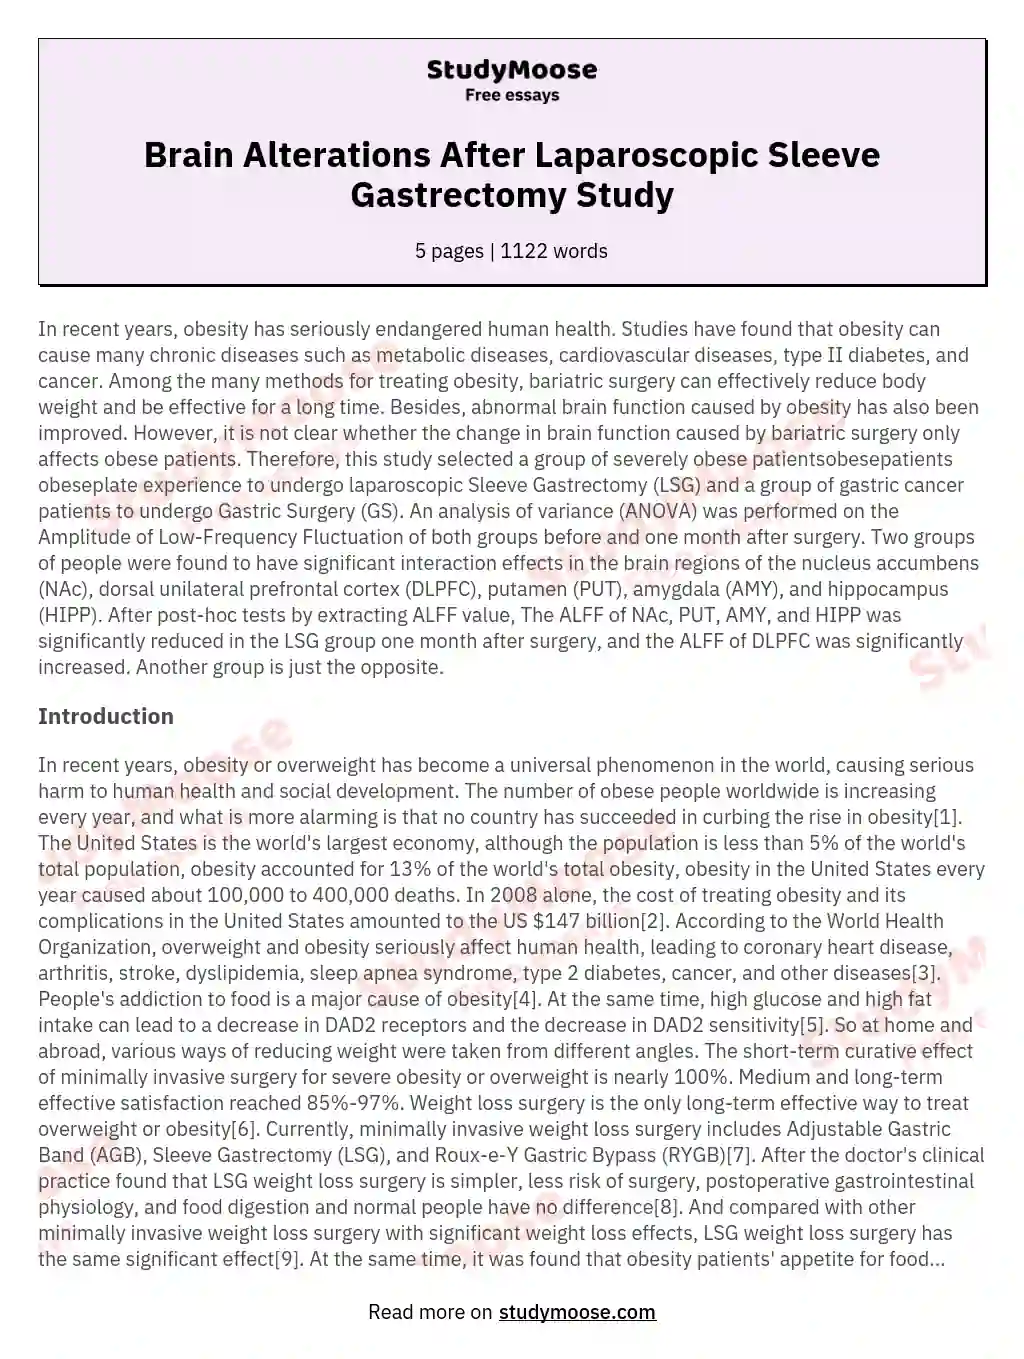 Brain Alterations After Laparoscopic Sleeve Gastrectomy Study essay